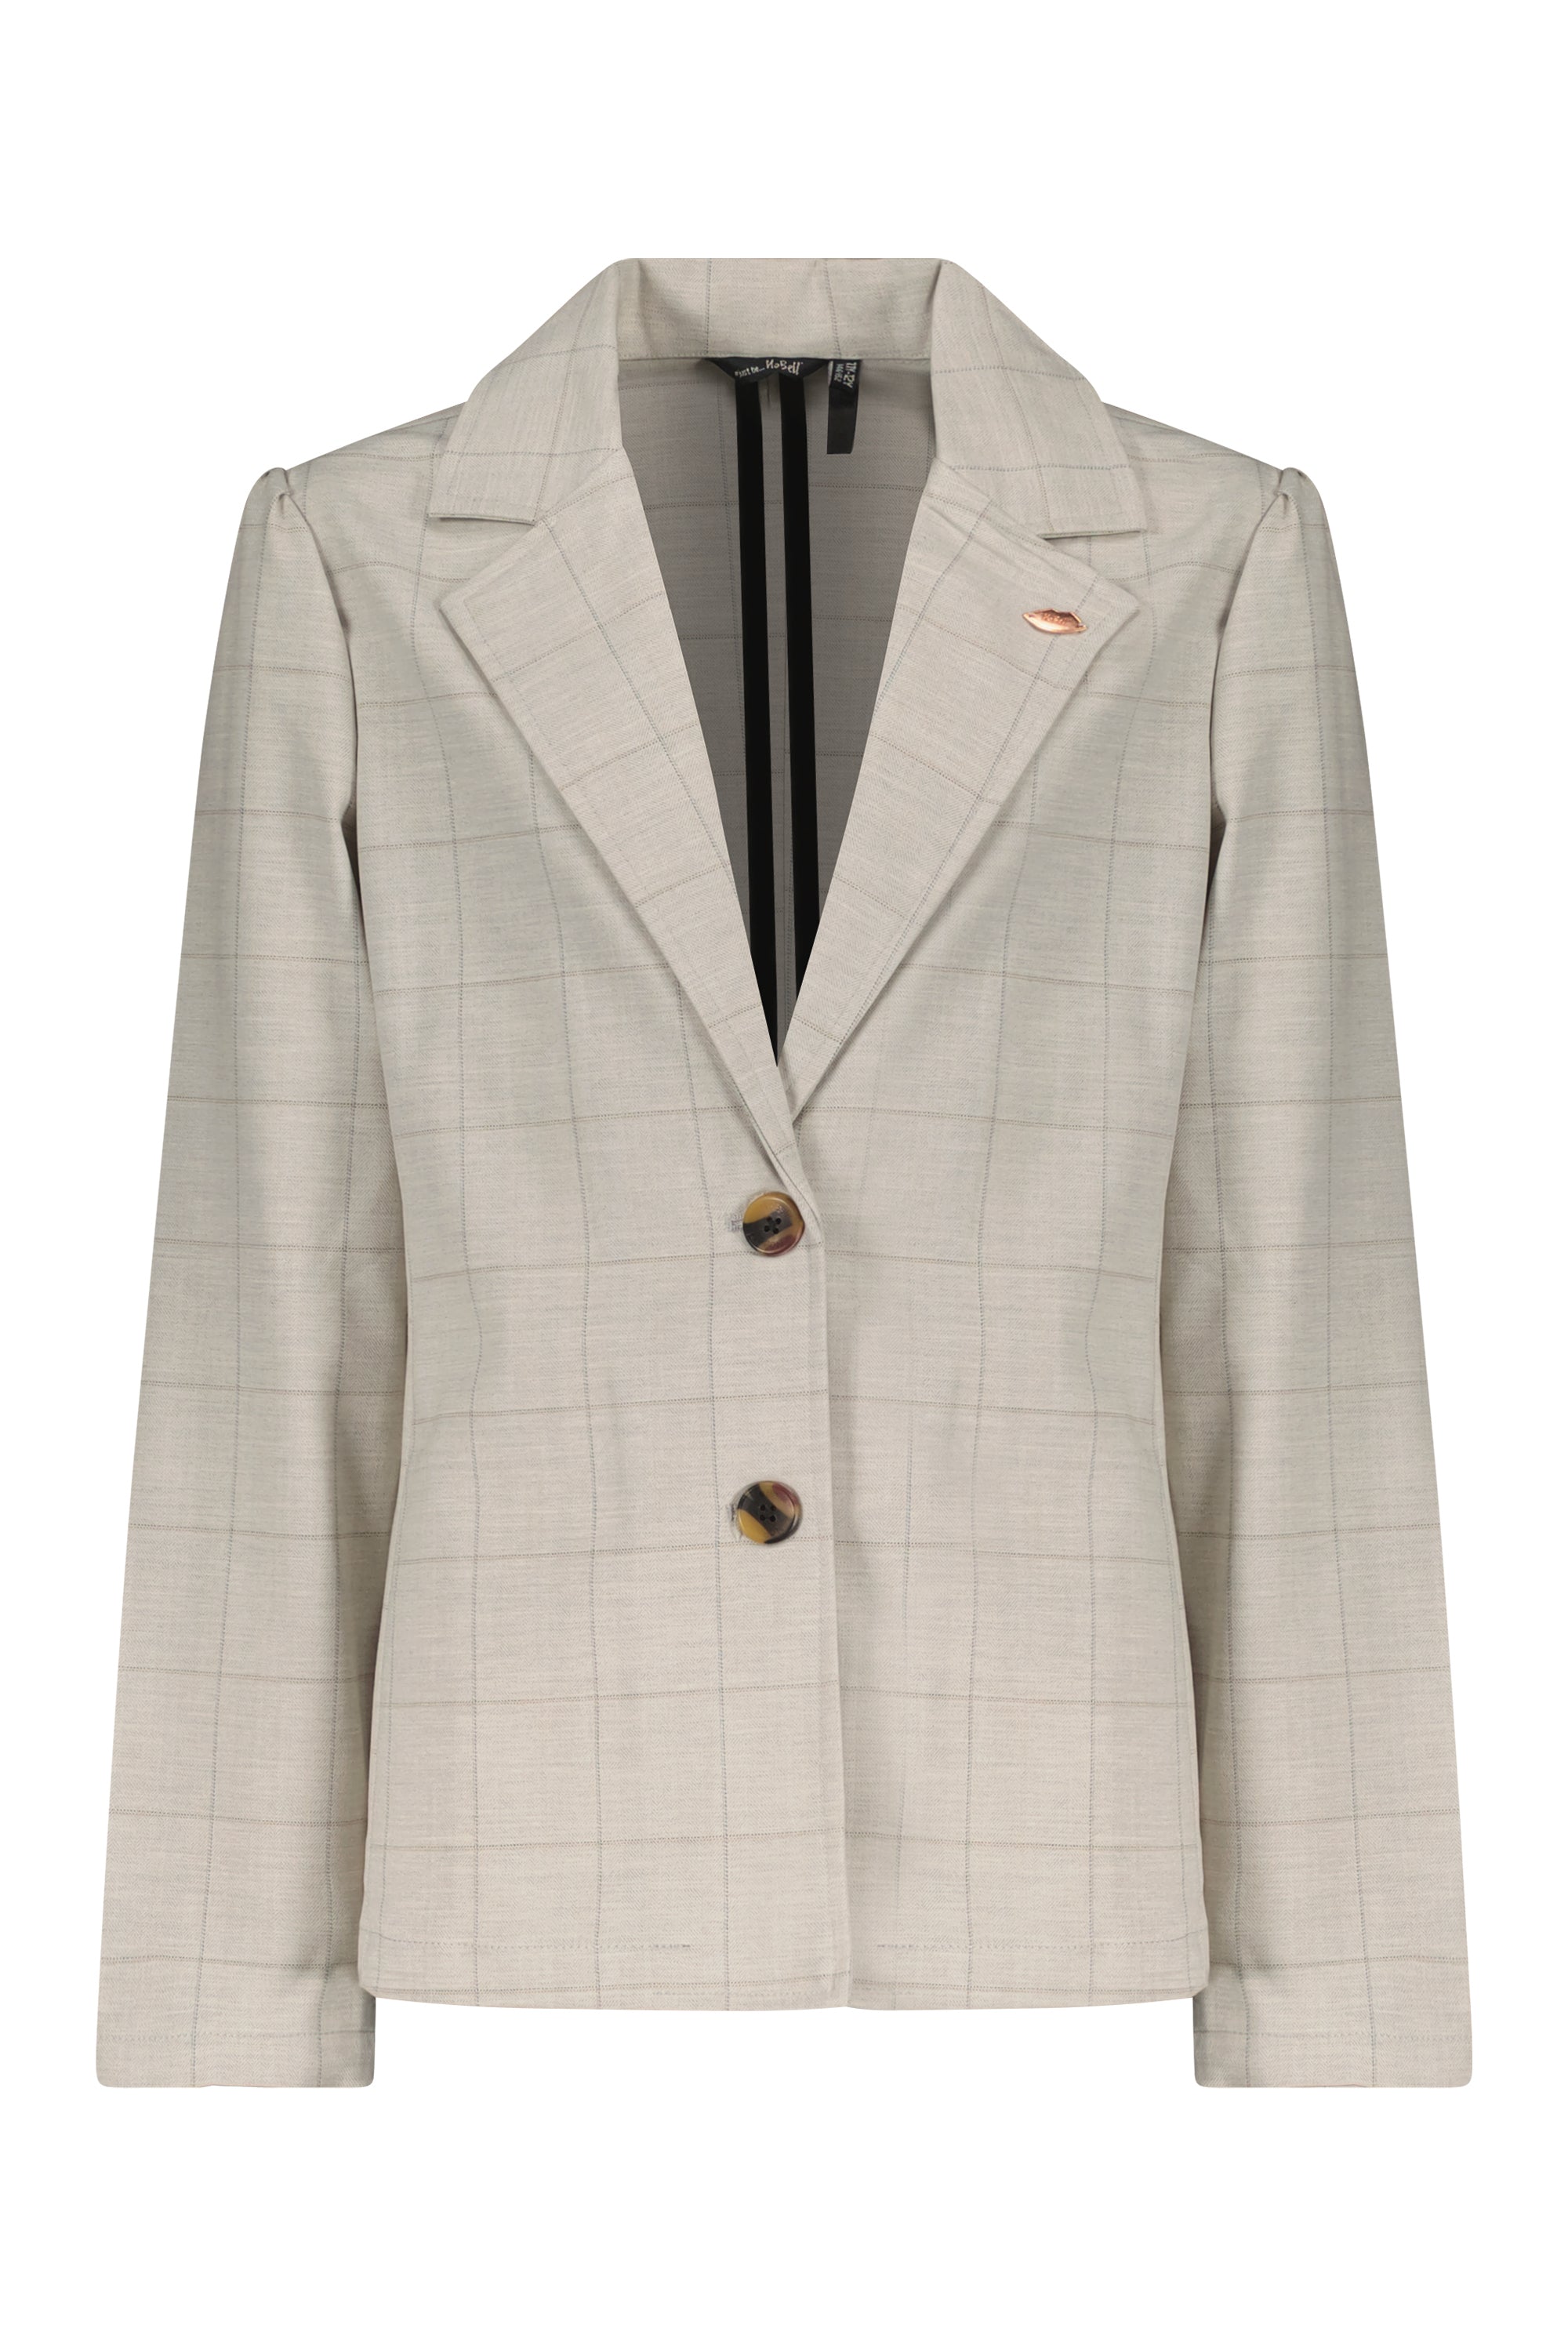 Meisjes Belia checkered blazer with puffed sleeves van NoBell in de kleur Pearl in maat 170-176.